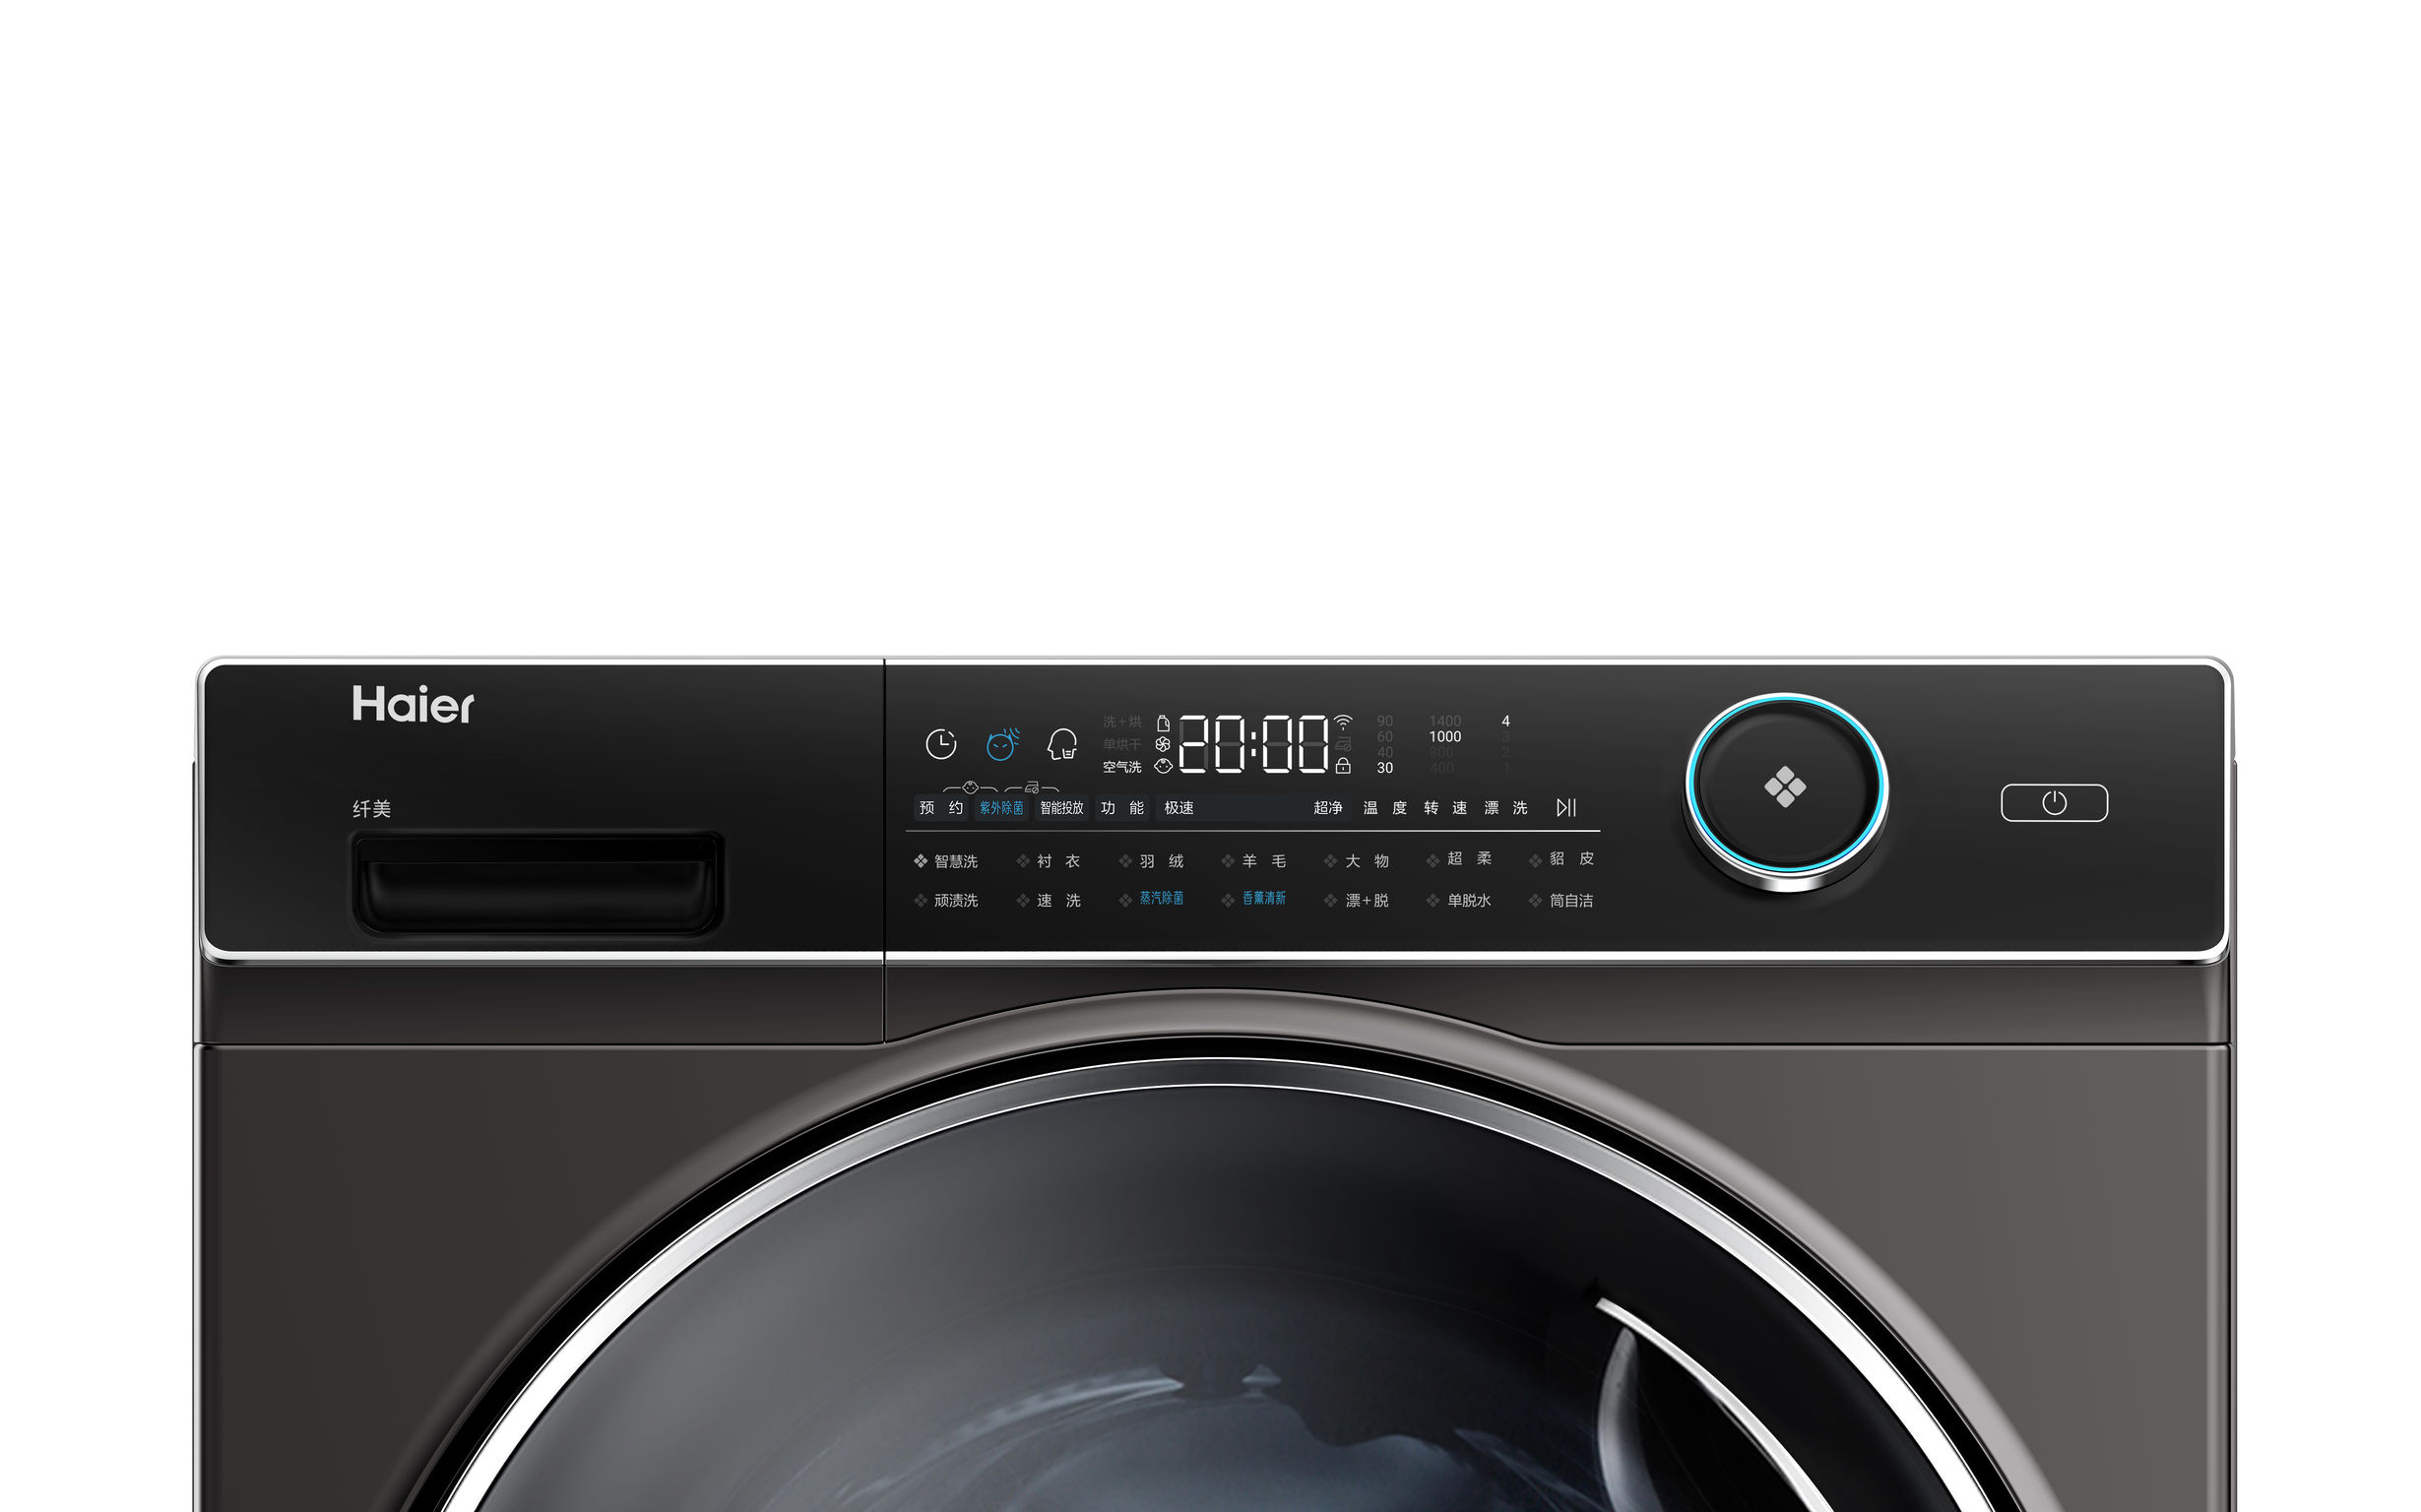 Haier 979 High-capacity washer